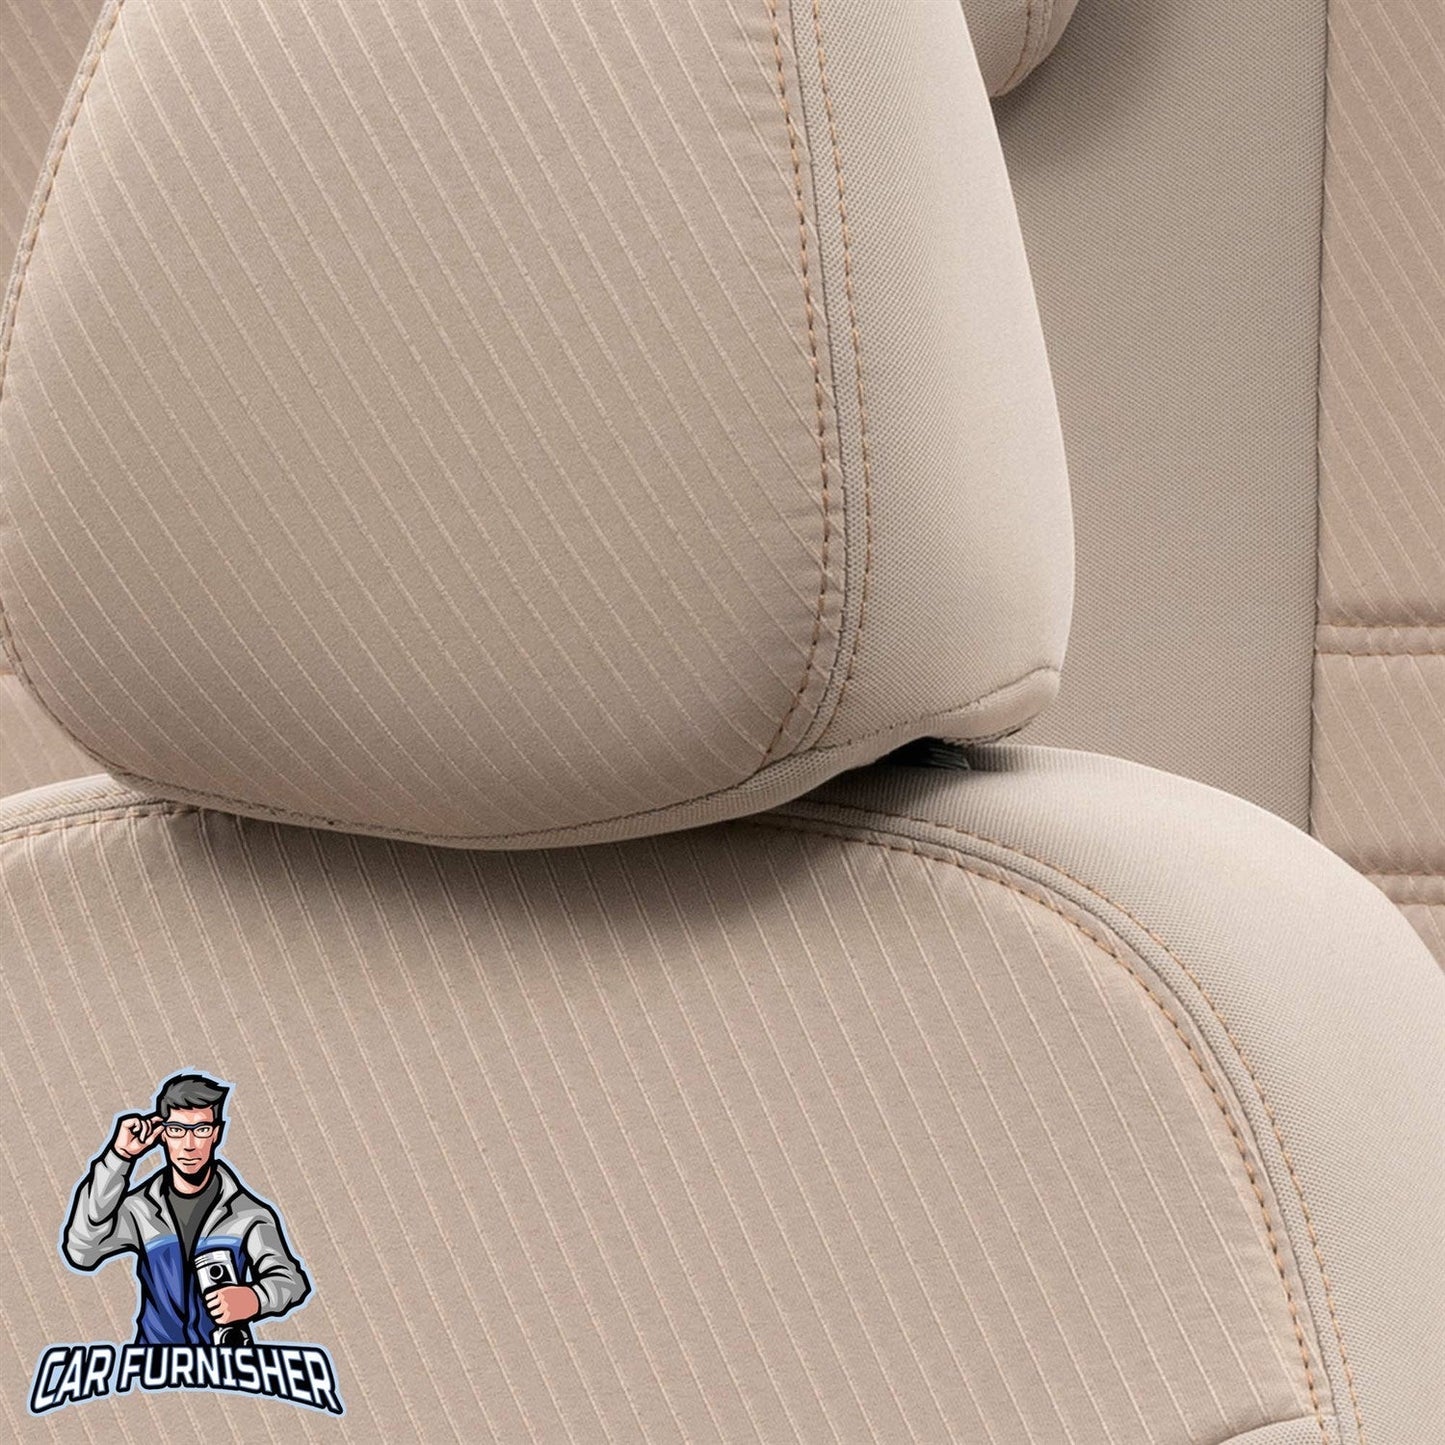 Citroen Berlingo Seat Covers Original Jacquard Design Dark Beige Jacquard Fabric